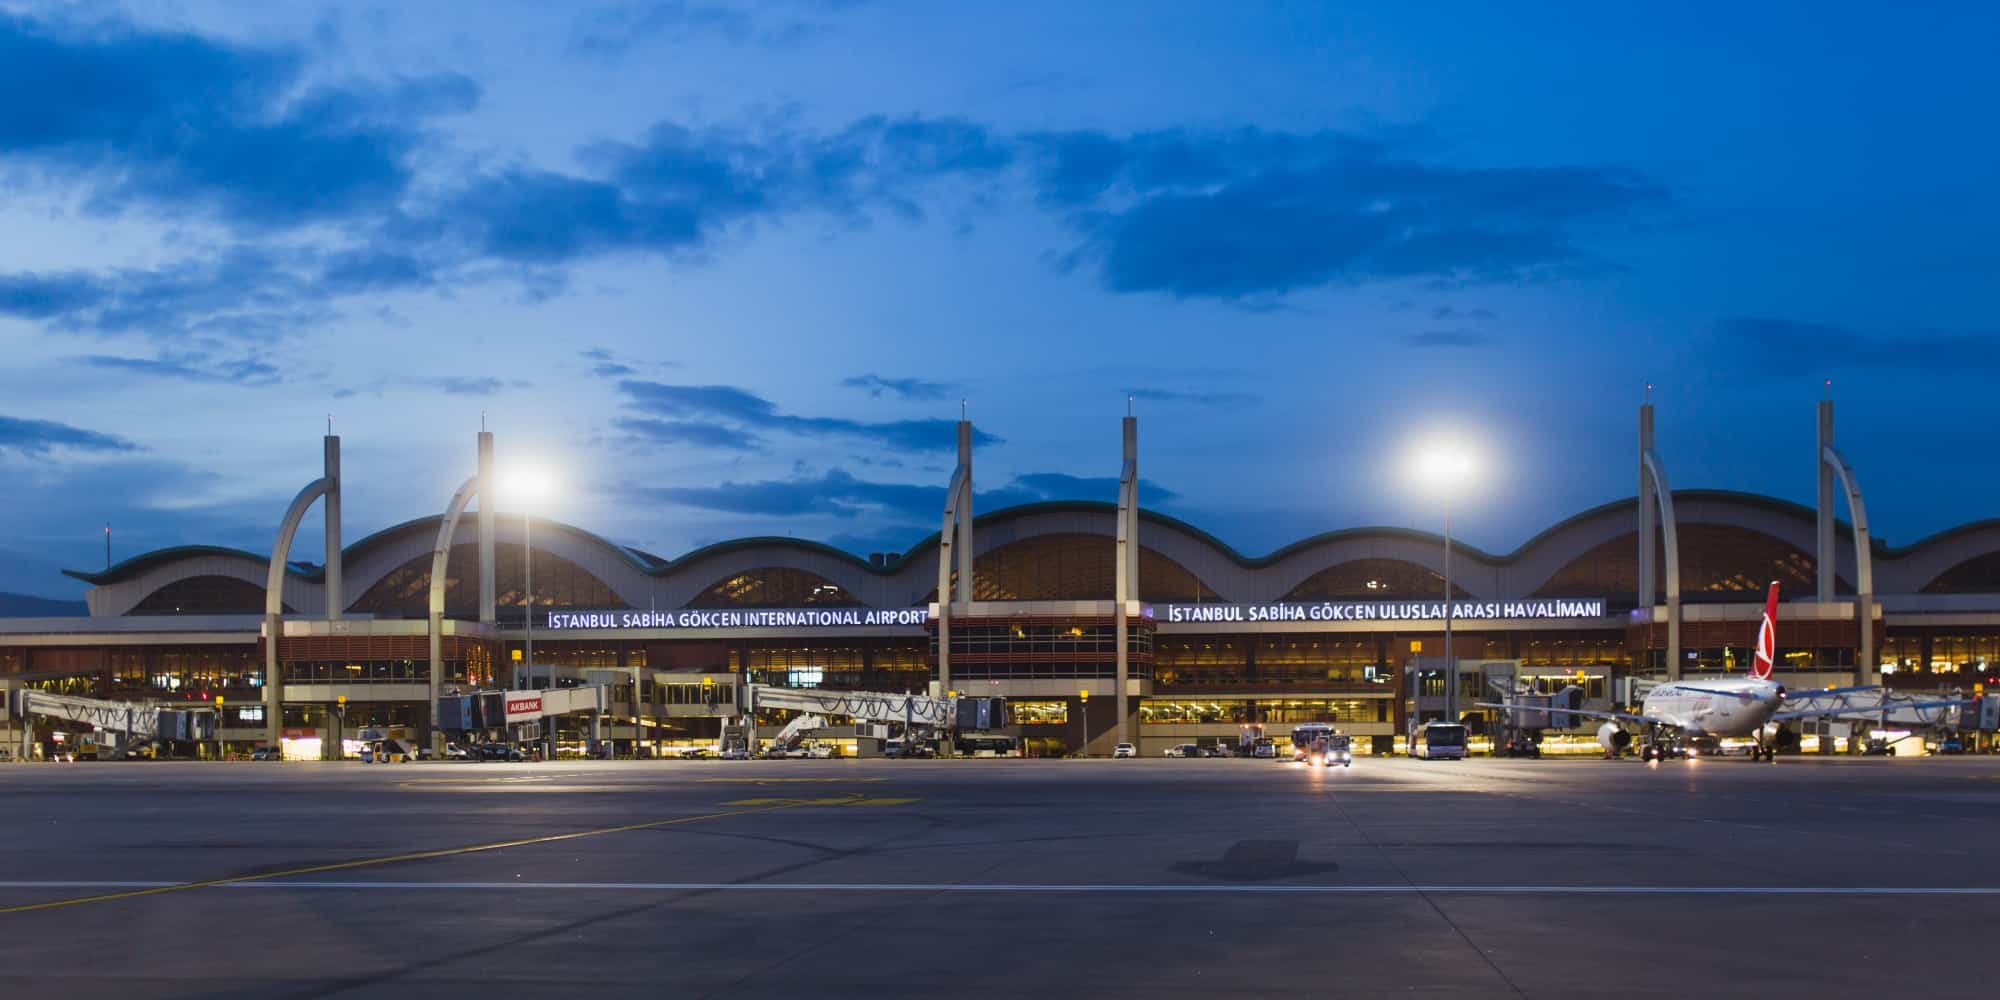 Picture of the Sabiha Gökçen (Sabiha Gokcen) International Airport in Istanbul